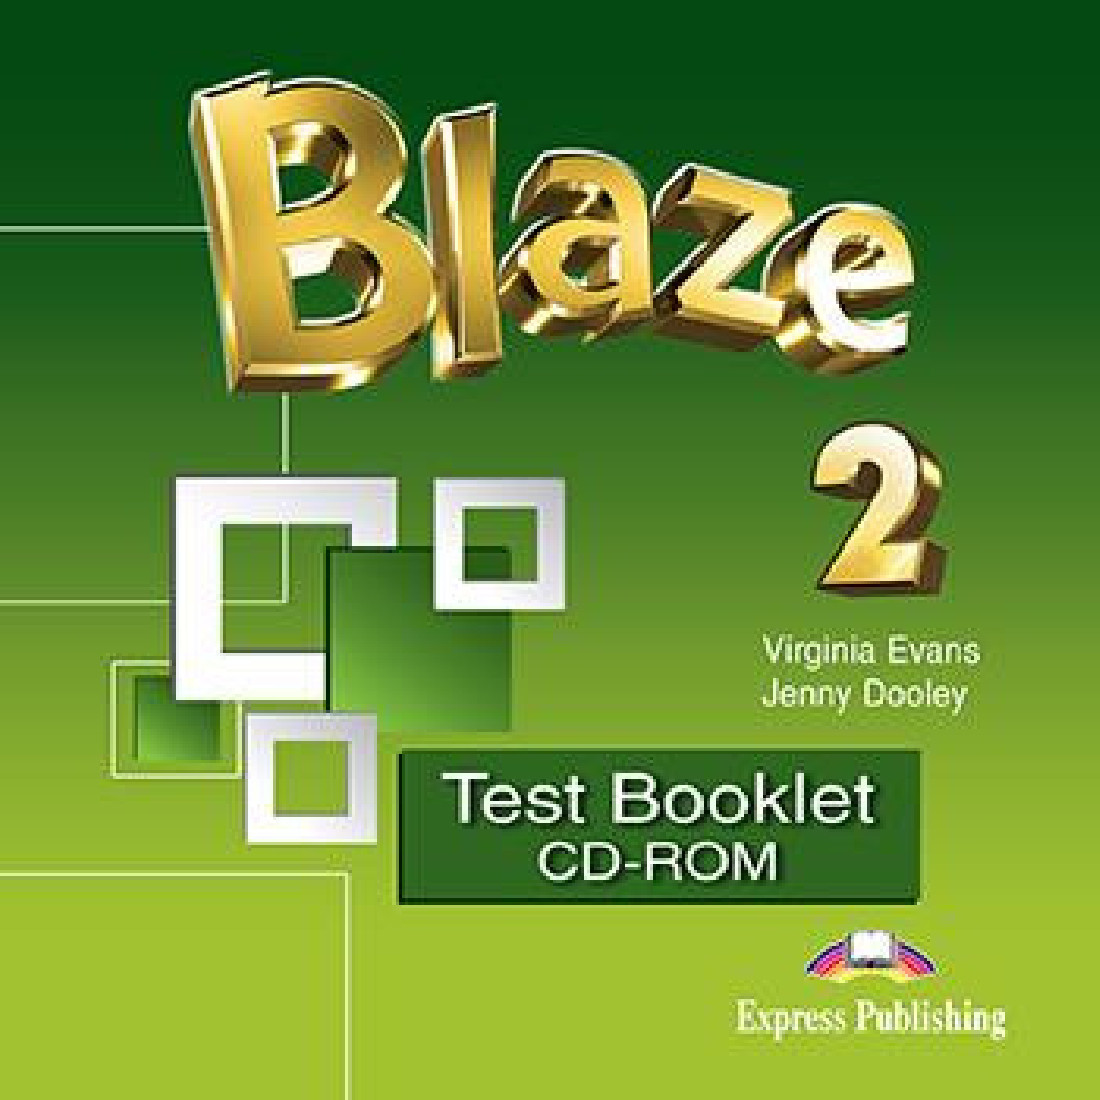 BLAZE 2 CD-ROM TEST